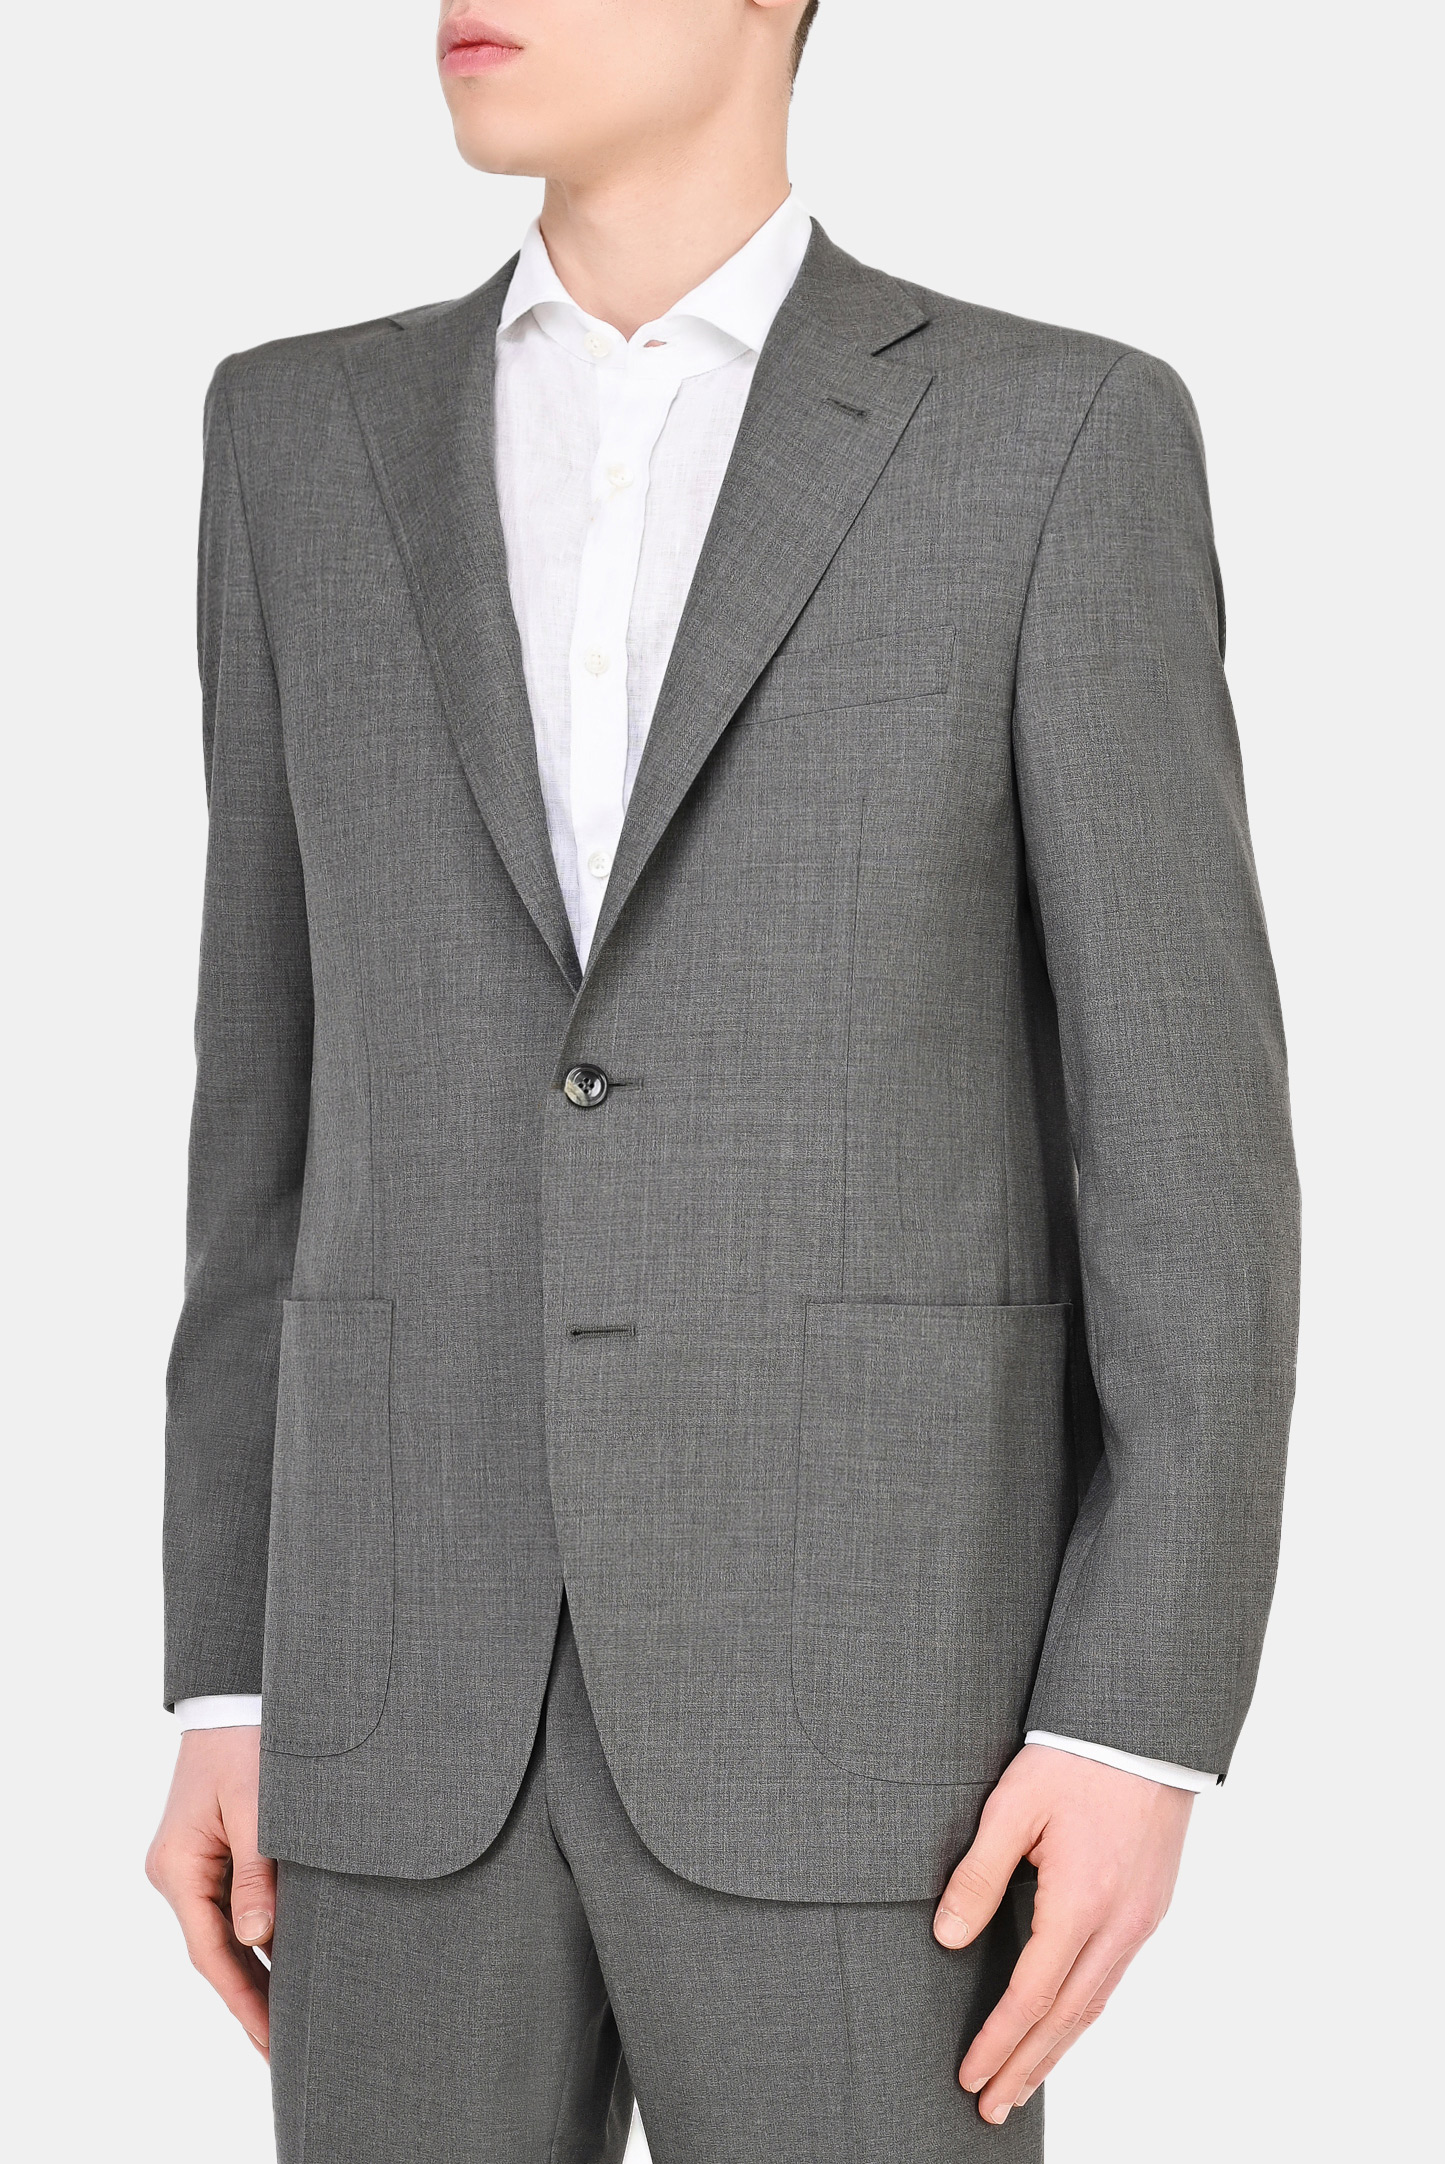 Пиджак CANALI AR03652 23275L/7R, цвет: Серый, Мужской